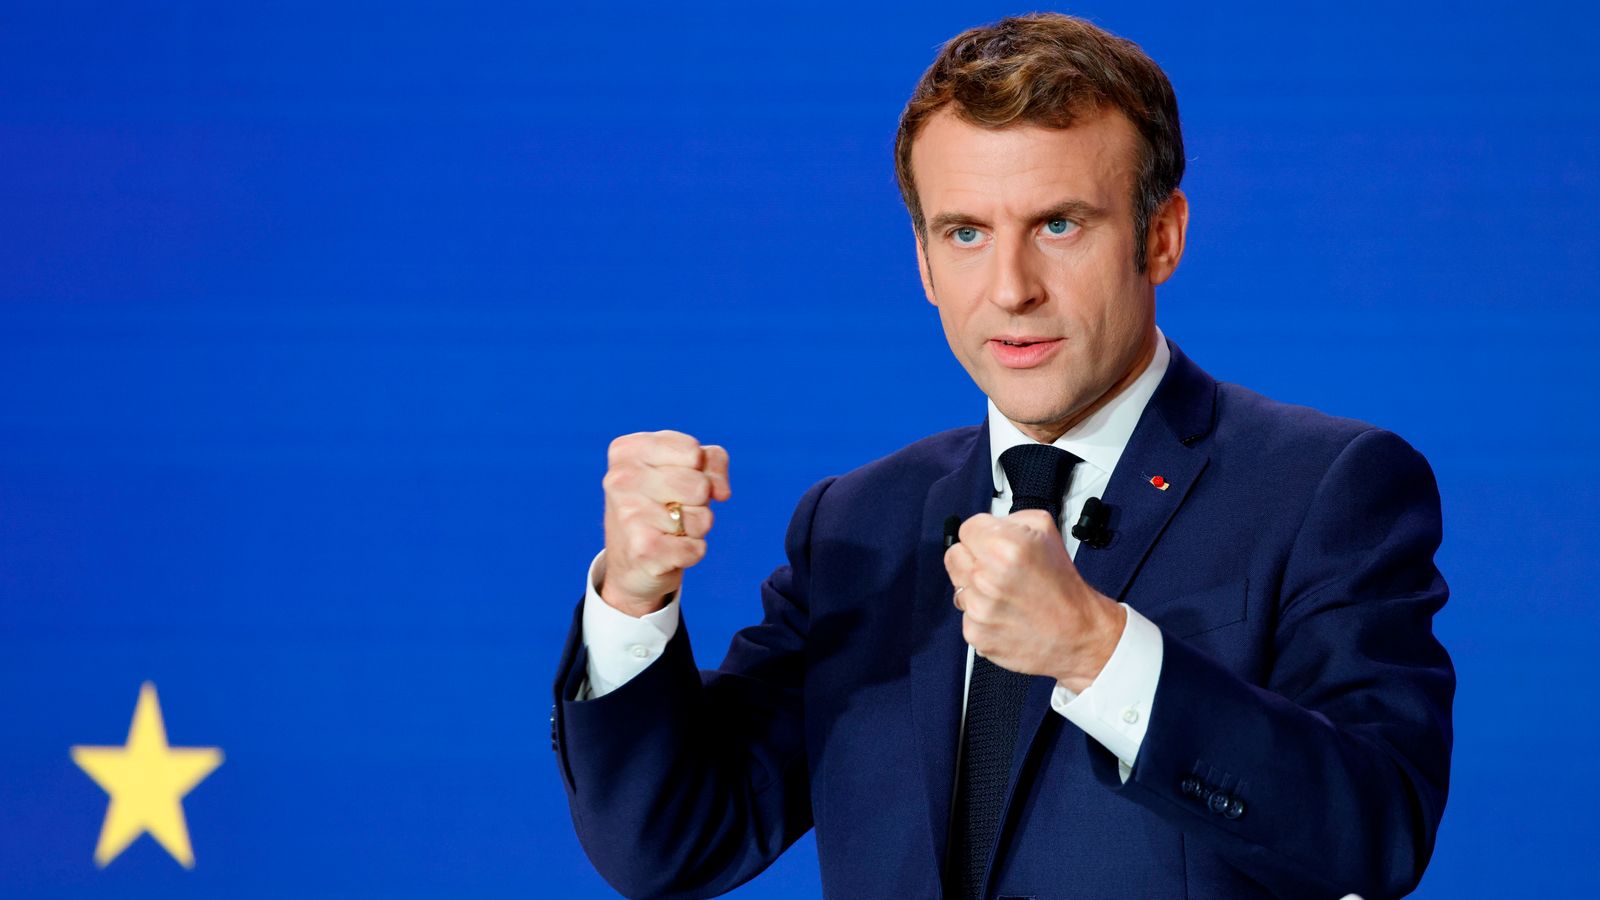 French President Emmanuel Macron to take on the EU rotating presidency from Jan 2022